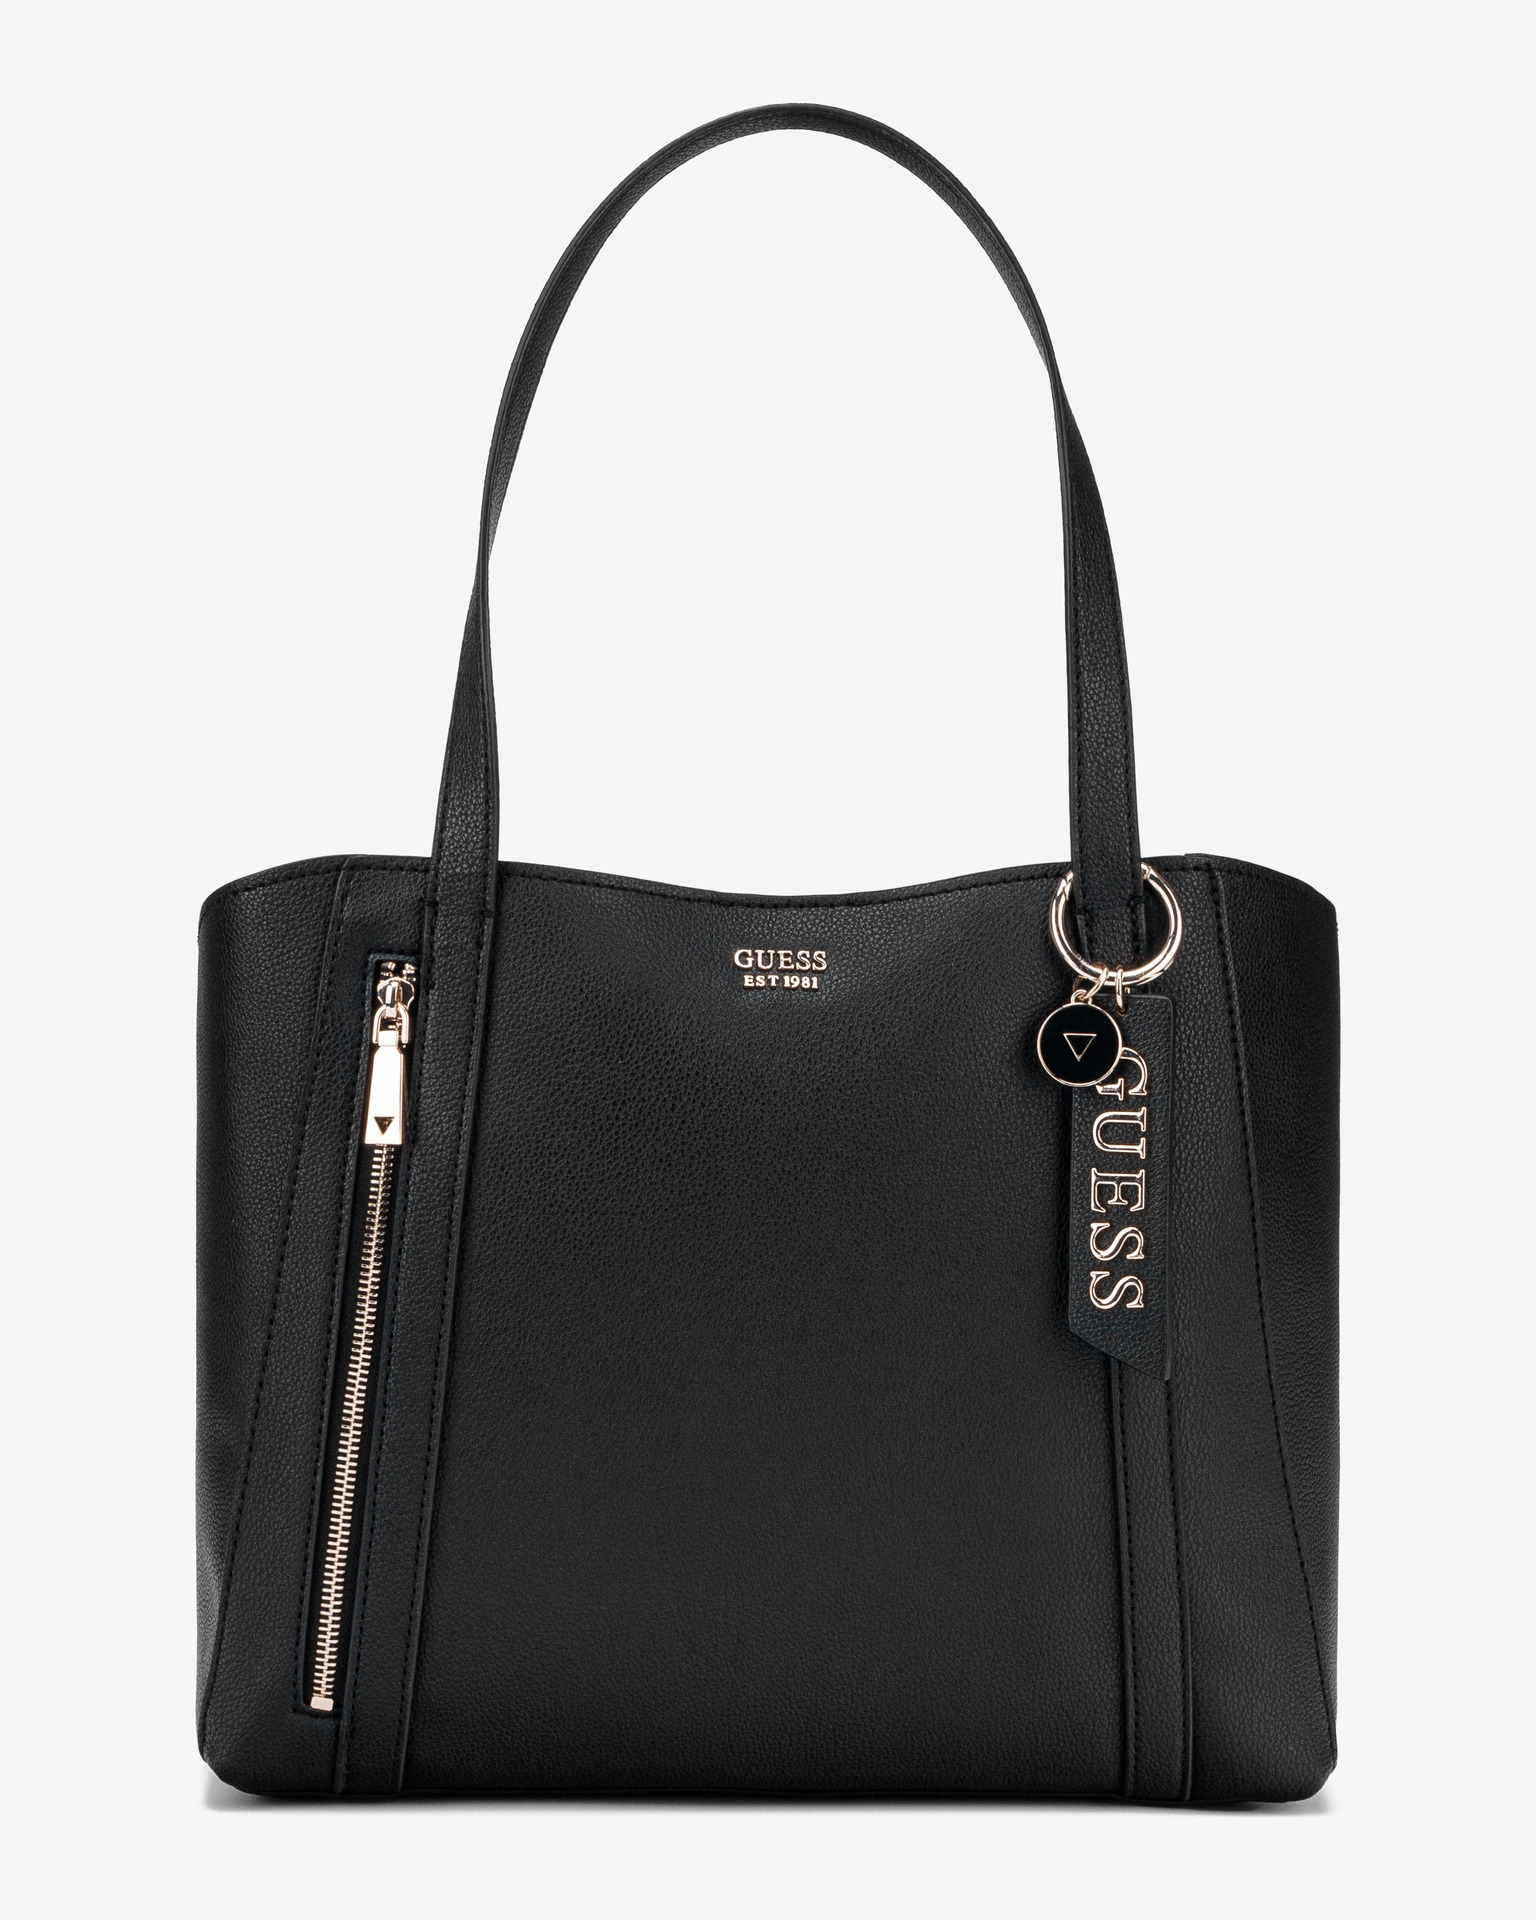 GUESS Bag, Yellow: Handbags: Amazon.com